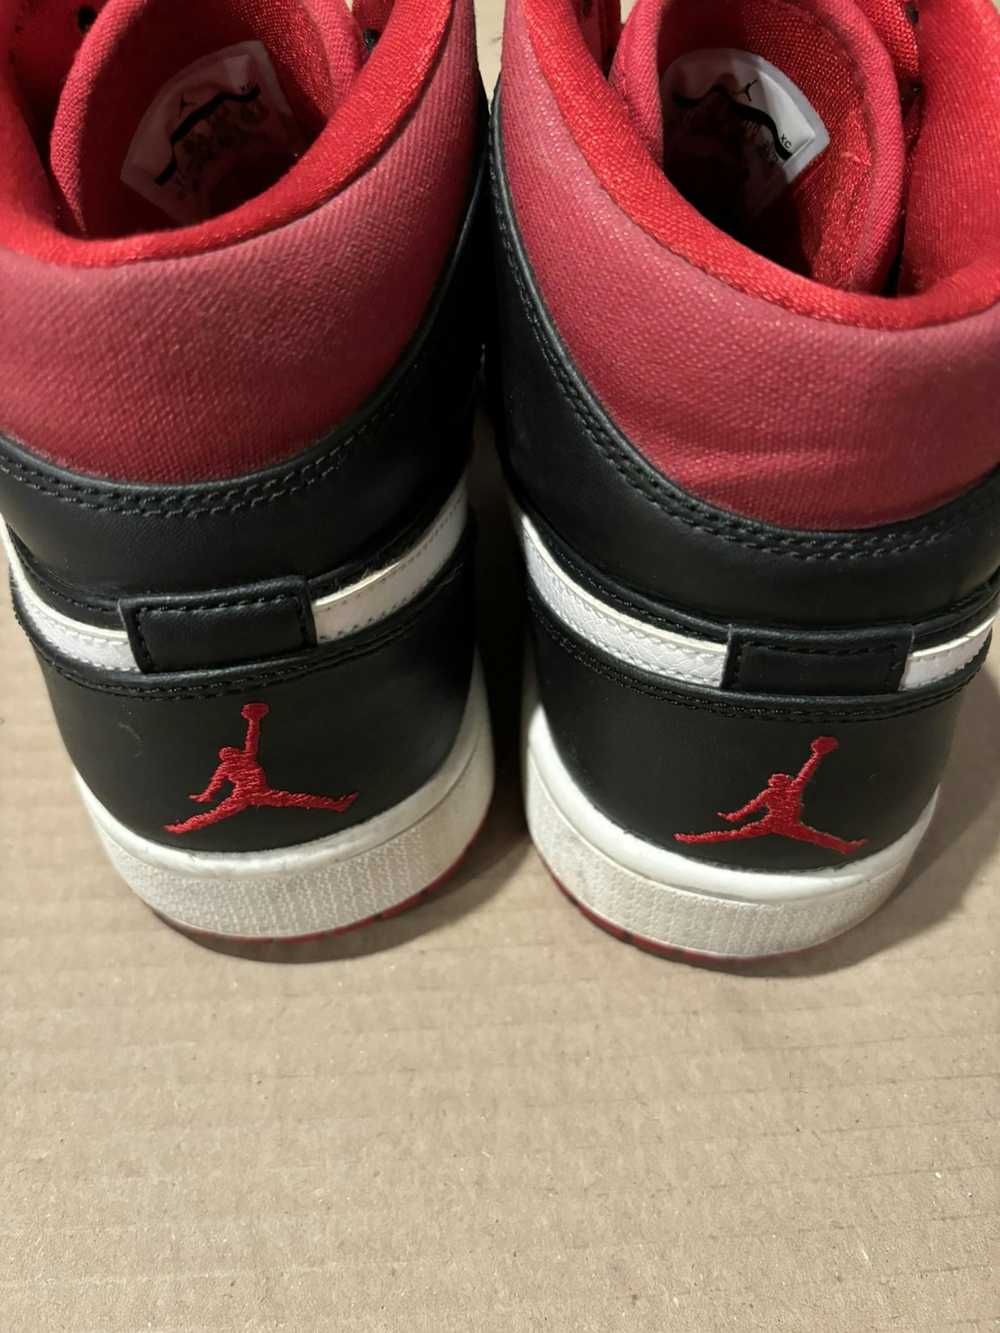 Jordan Brand × Nike Air Jordan 1 mid Black Gym Red - image 5